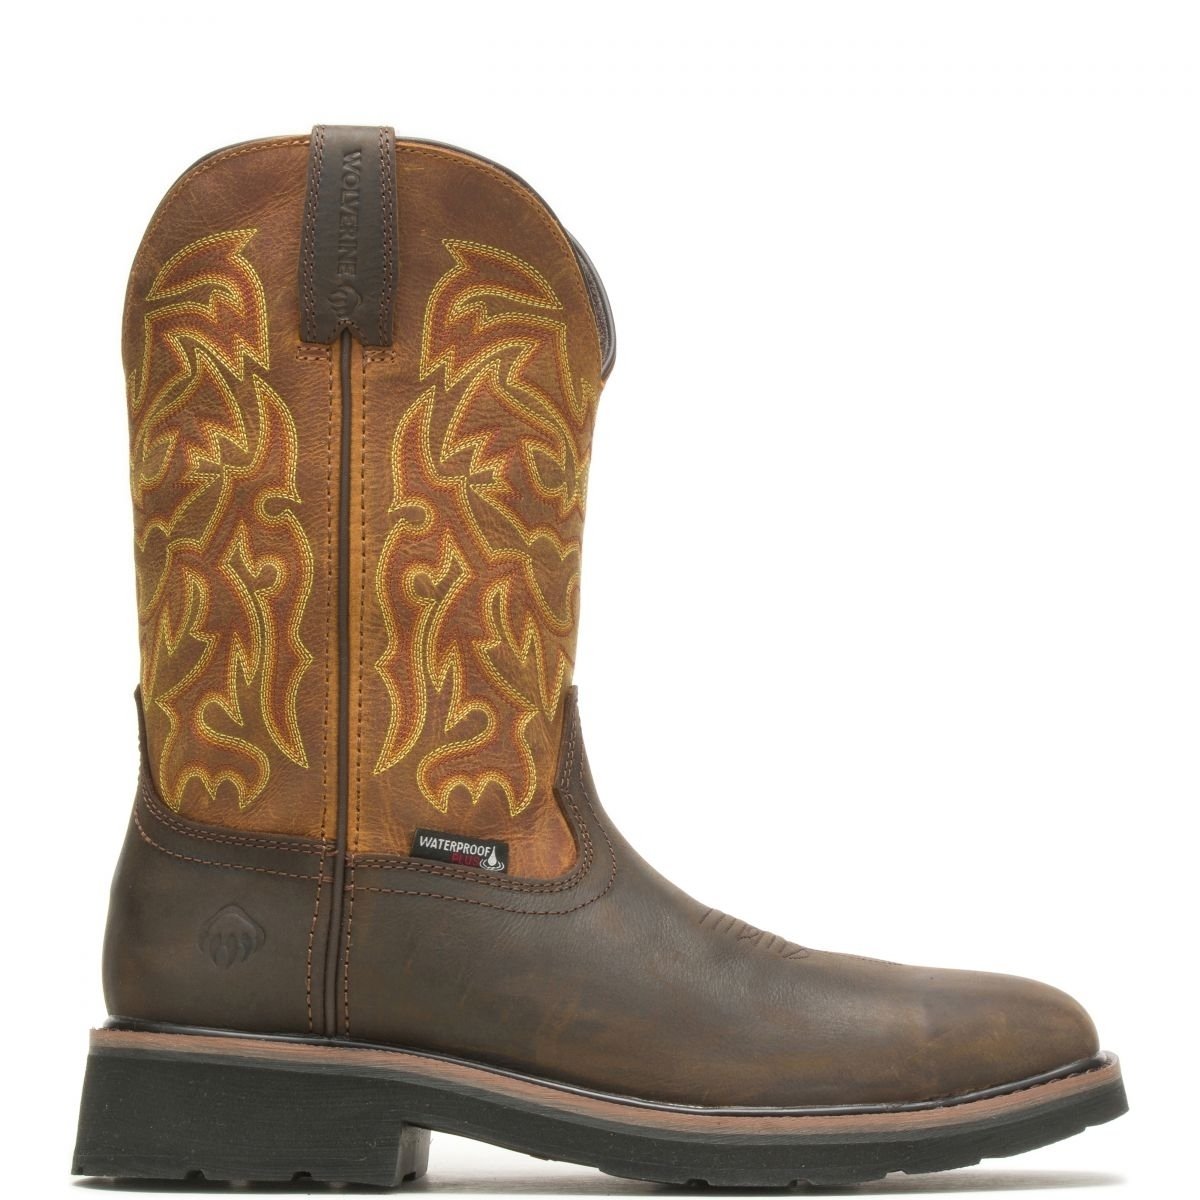 WOLVERINE Men's Rancher 10 Steel Toe Waterproof Work Boot Golden/Brown - W221029 GOLDEN/BROWN - GOLDEN/BROWN, 11-M